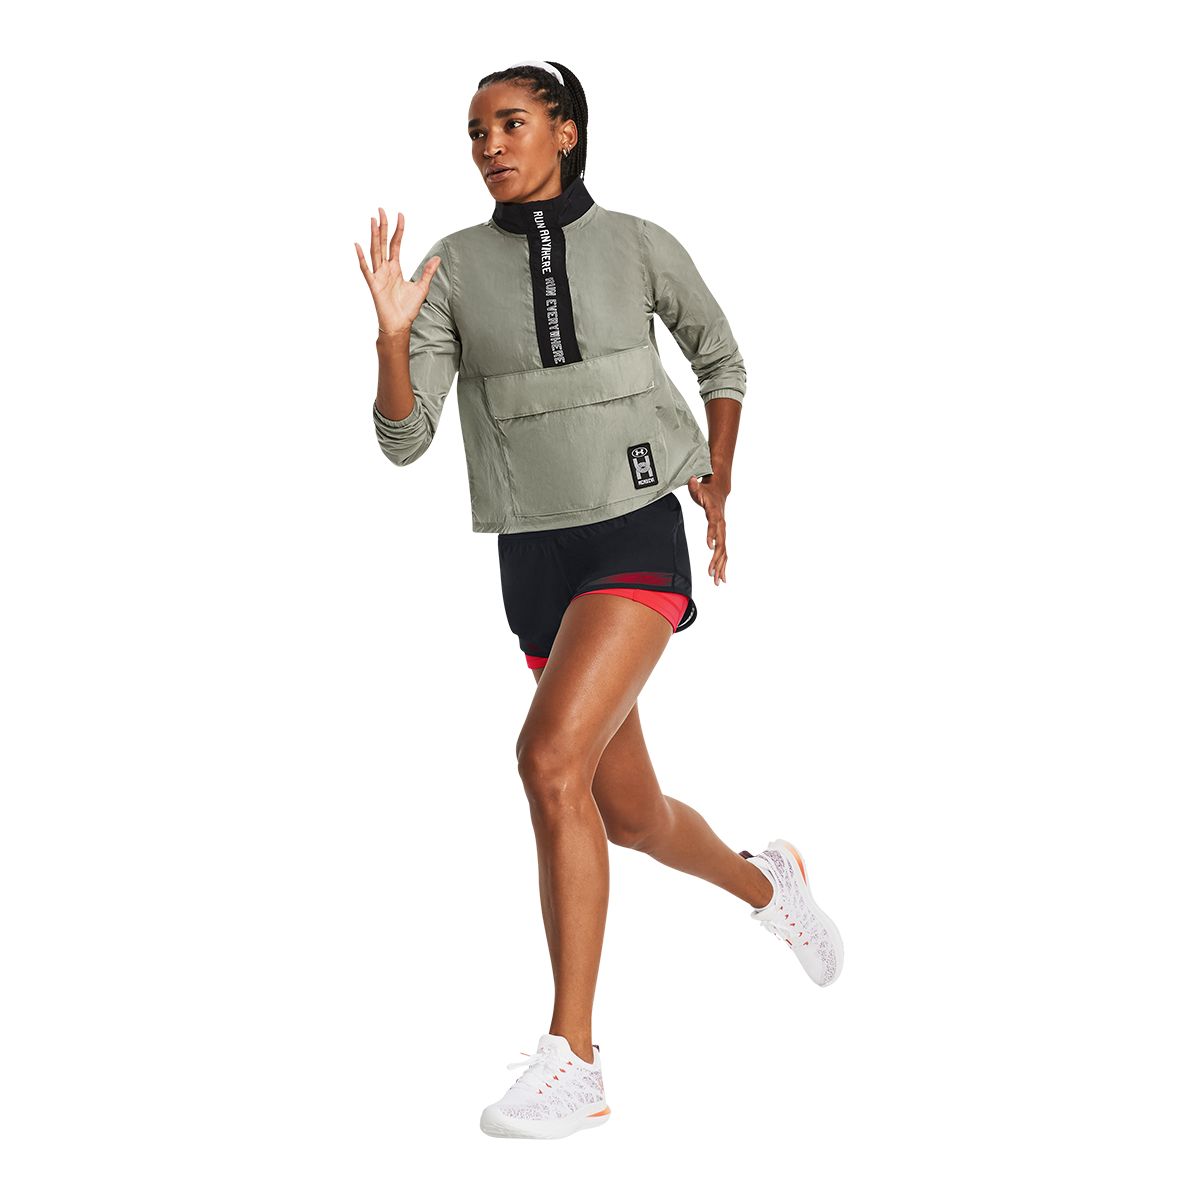 Women's Running T-Shirt Under Armour Straker 2.0 Short Sleeve - inSPORTline